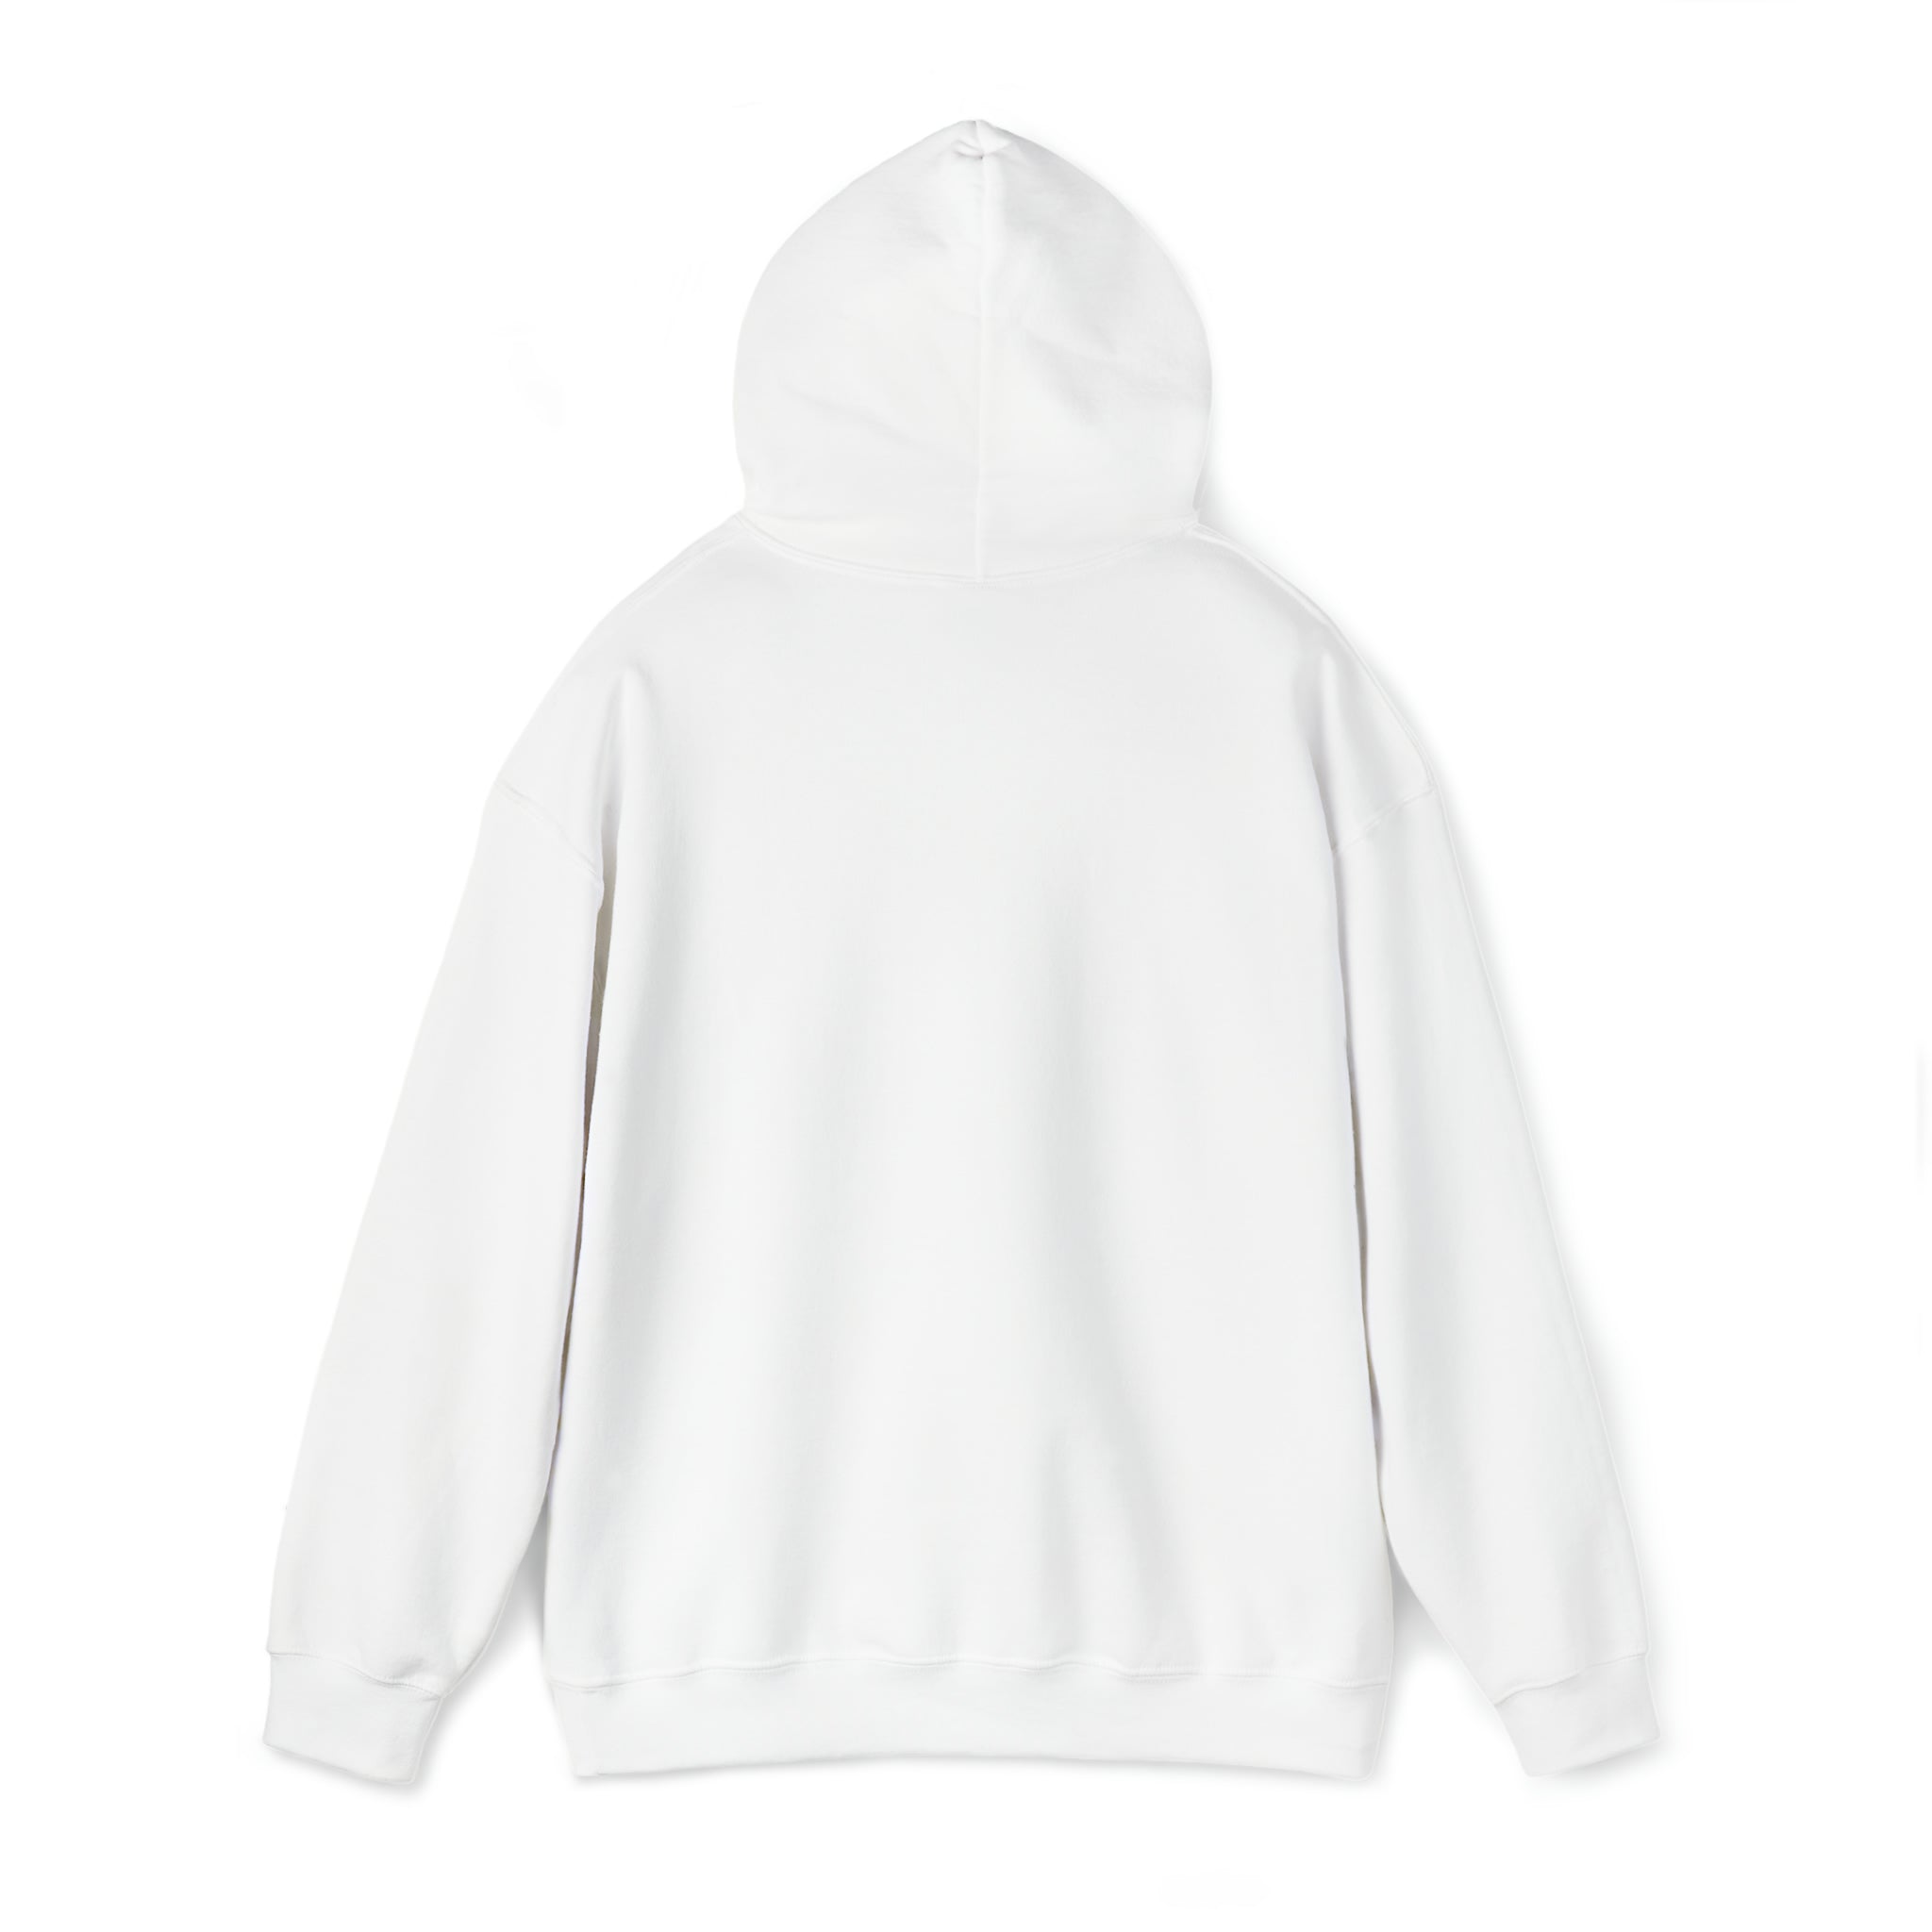 Curiosity is a spiritual practice - Unisex Heavy Blend™ Hooded Sweatshirt